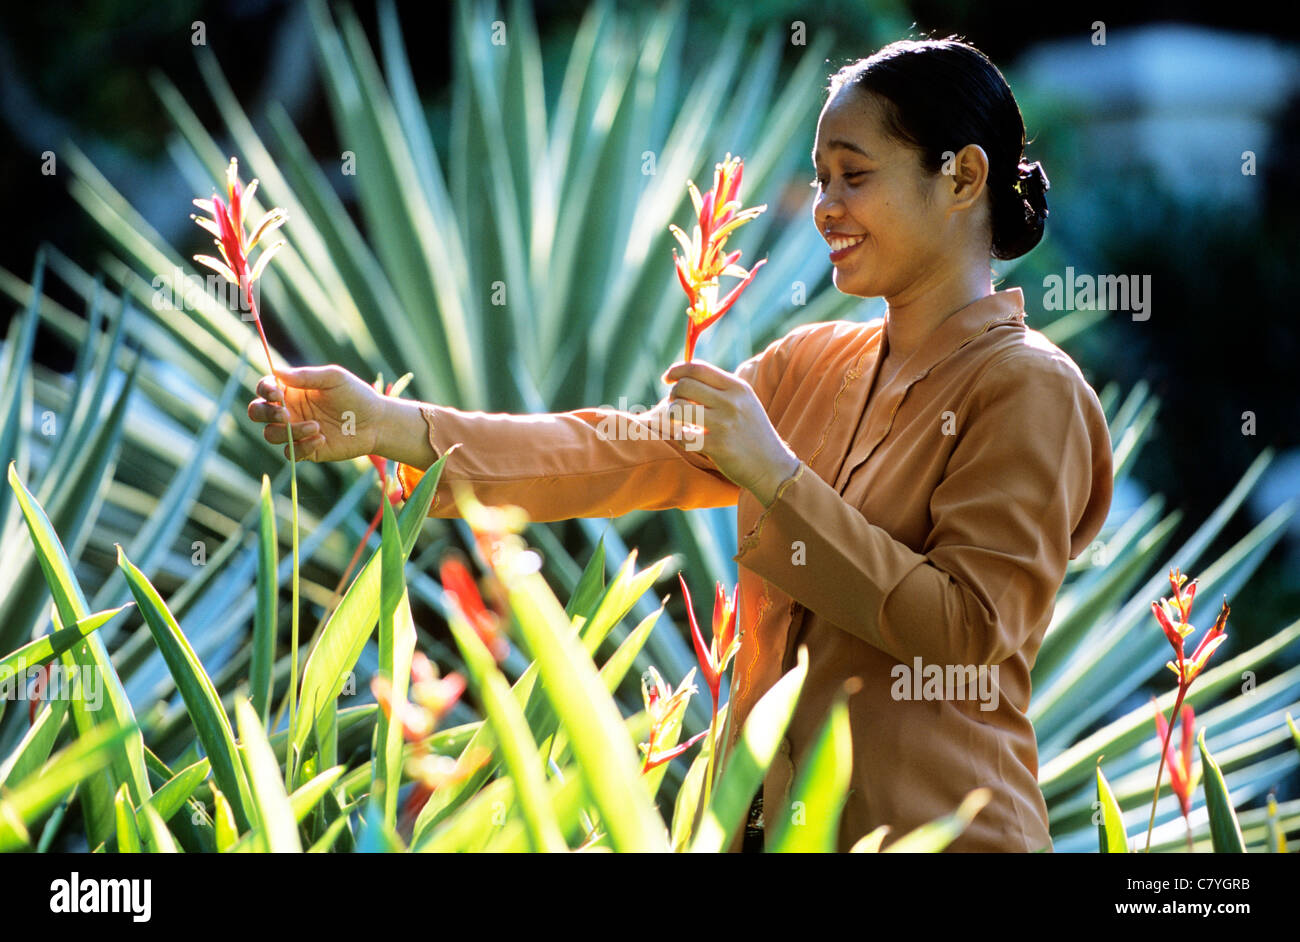 Malaysia, Kuala Dungun, woman with flowers Stock Photo